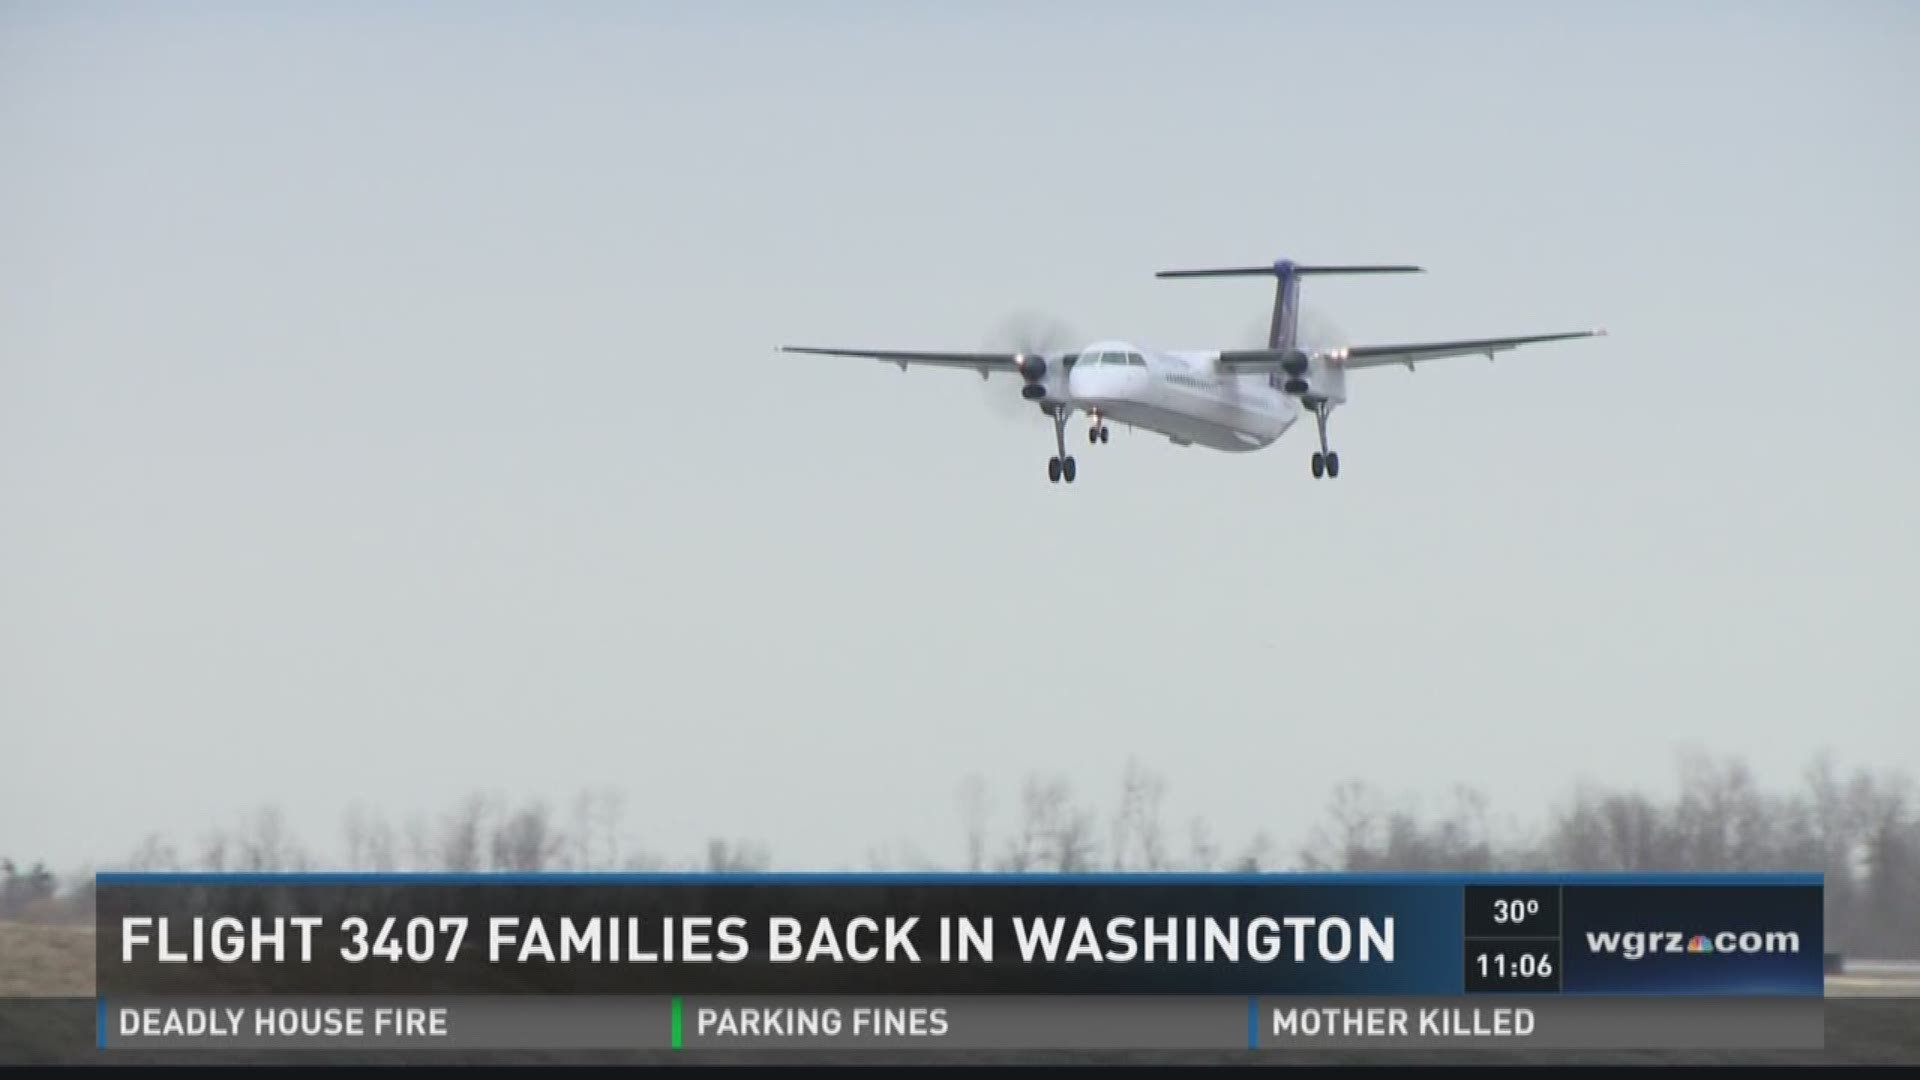 Flight 3407 families back in Washington